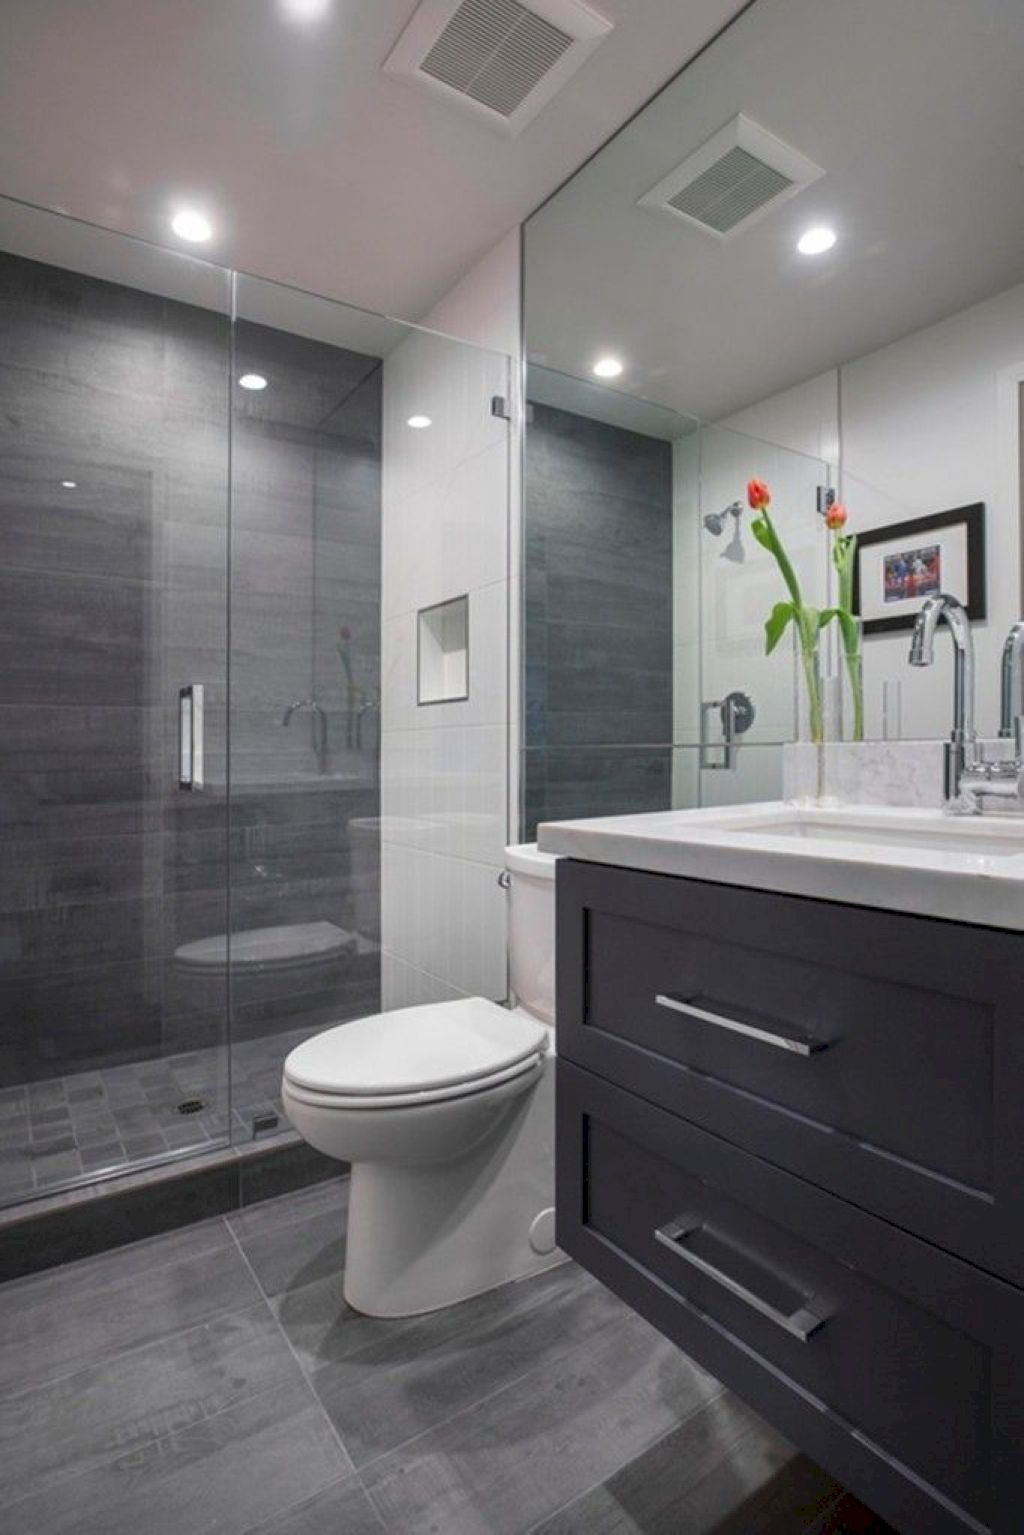 09 awesome master bathroom remodel ideas.jpg